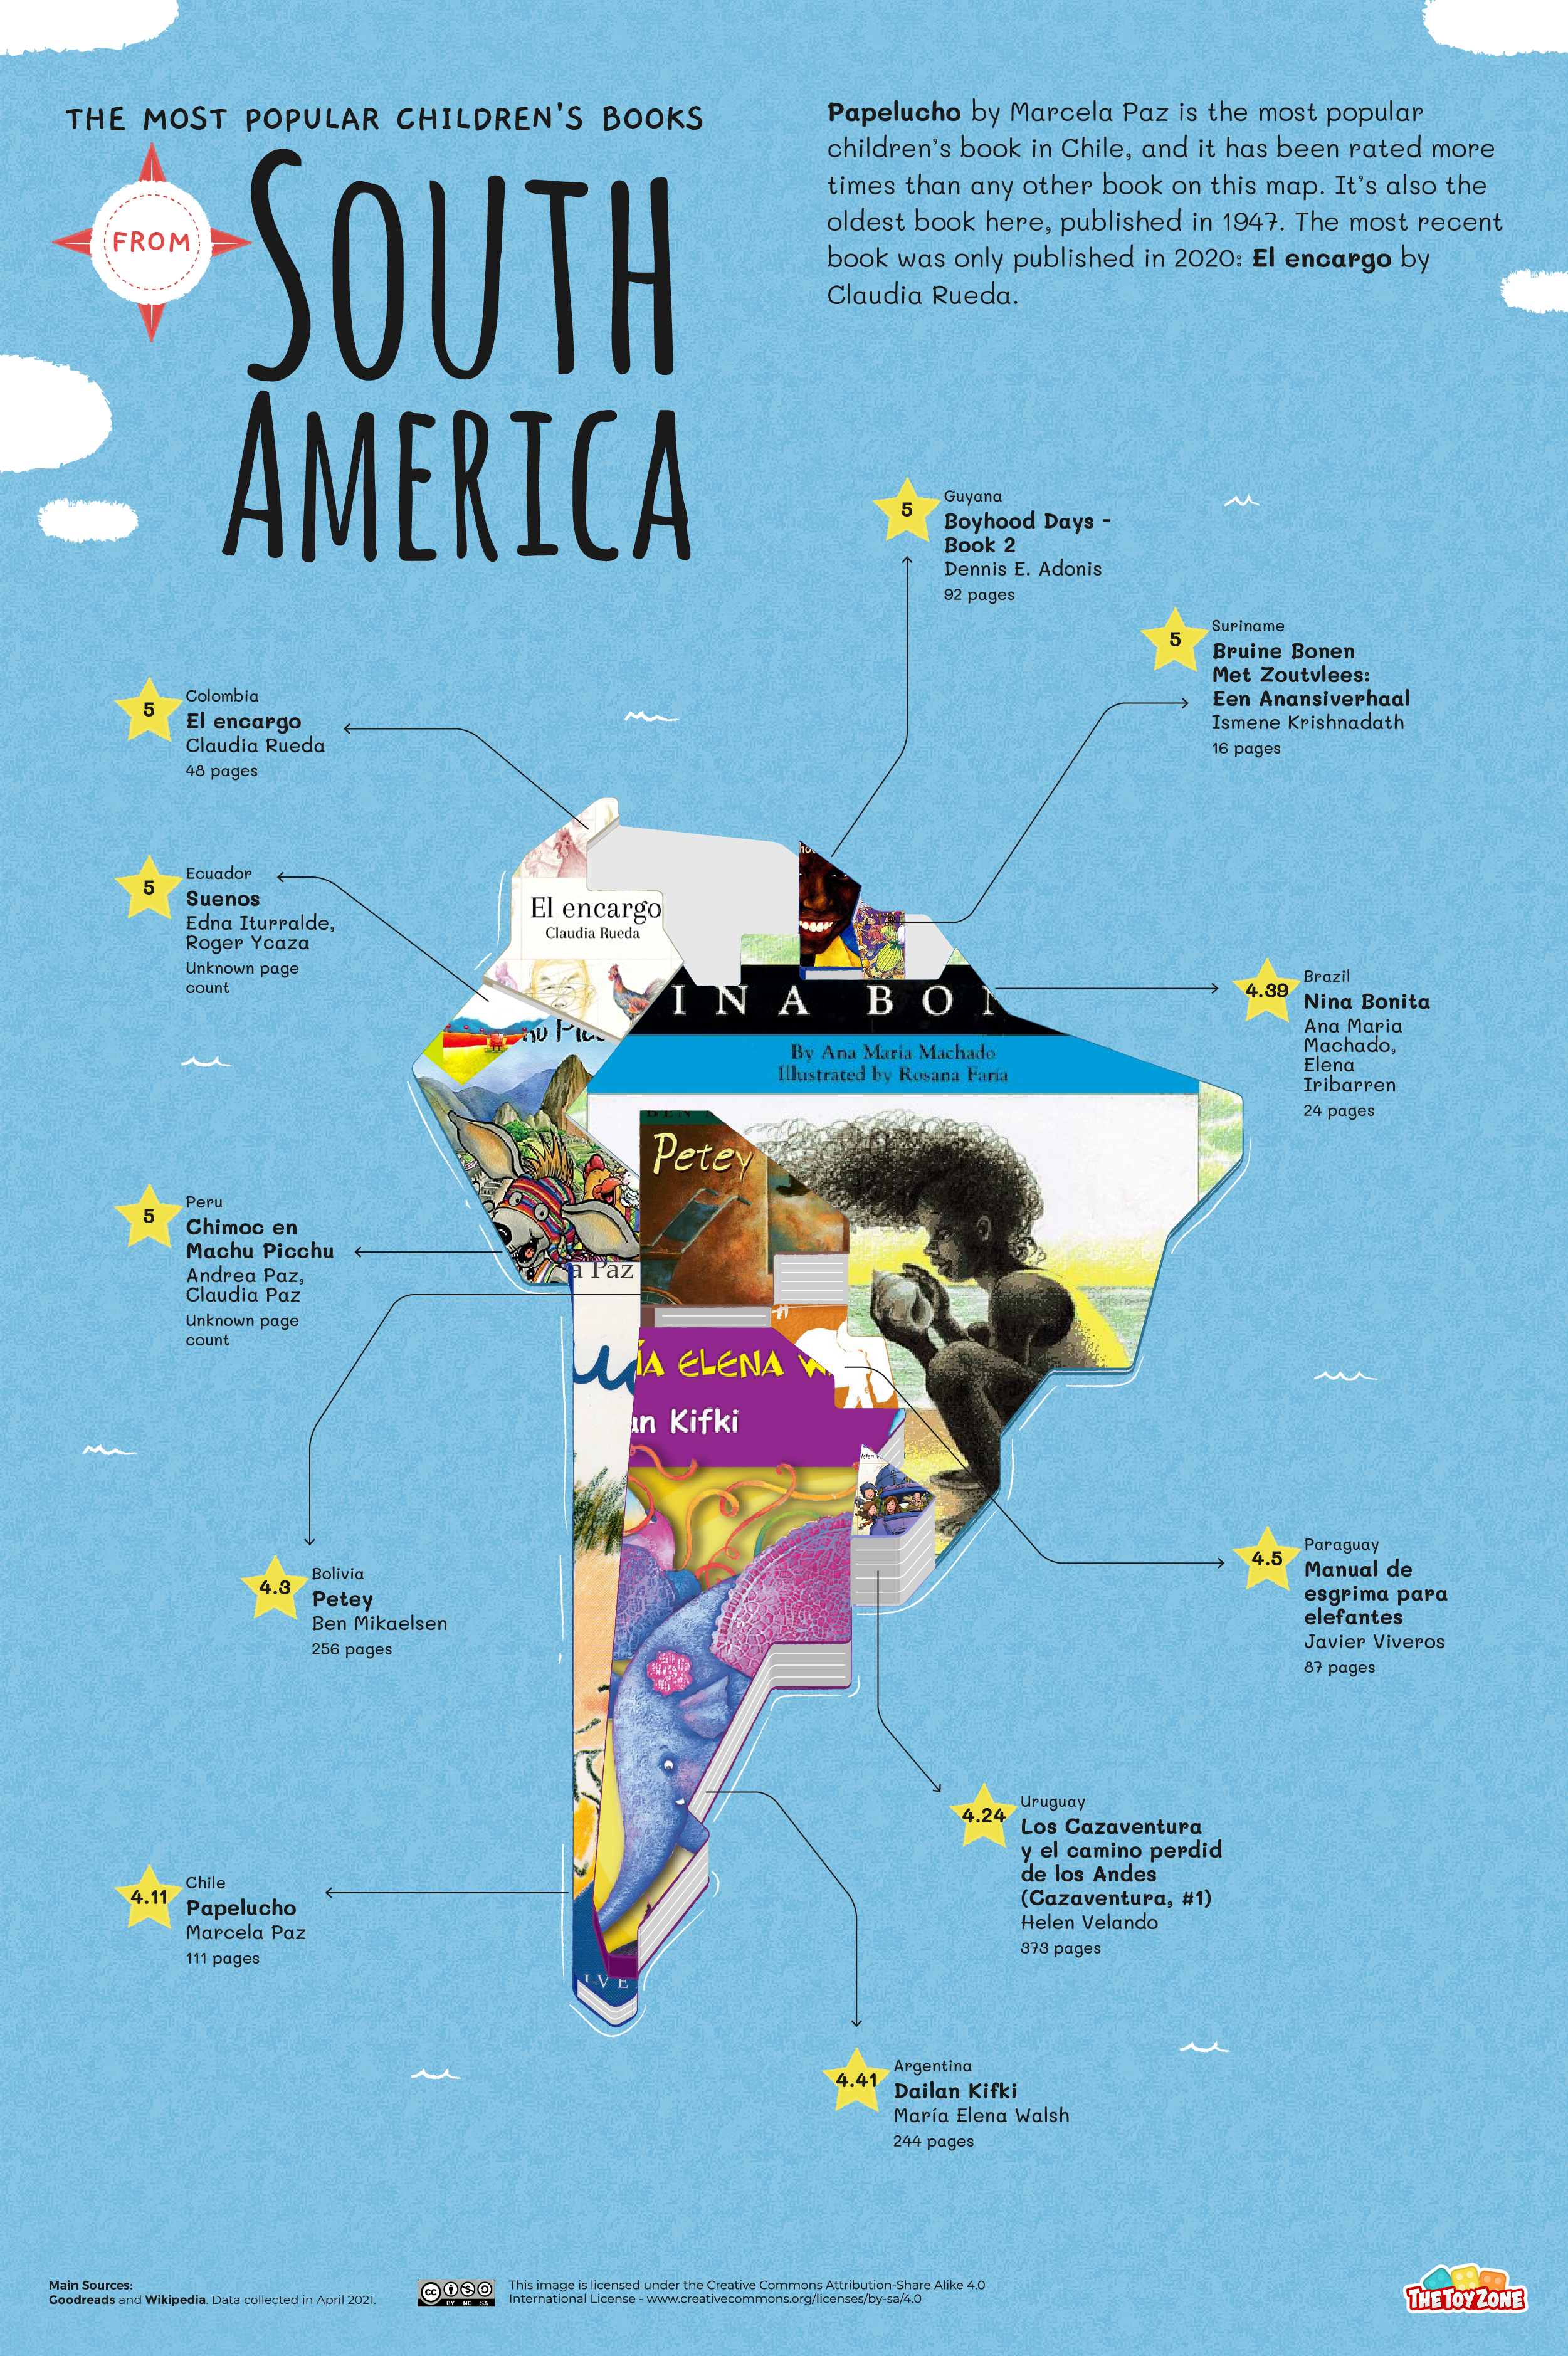 Most popular children's books in South America map